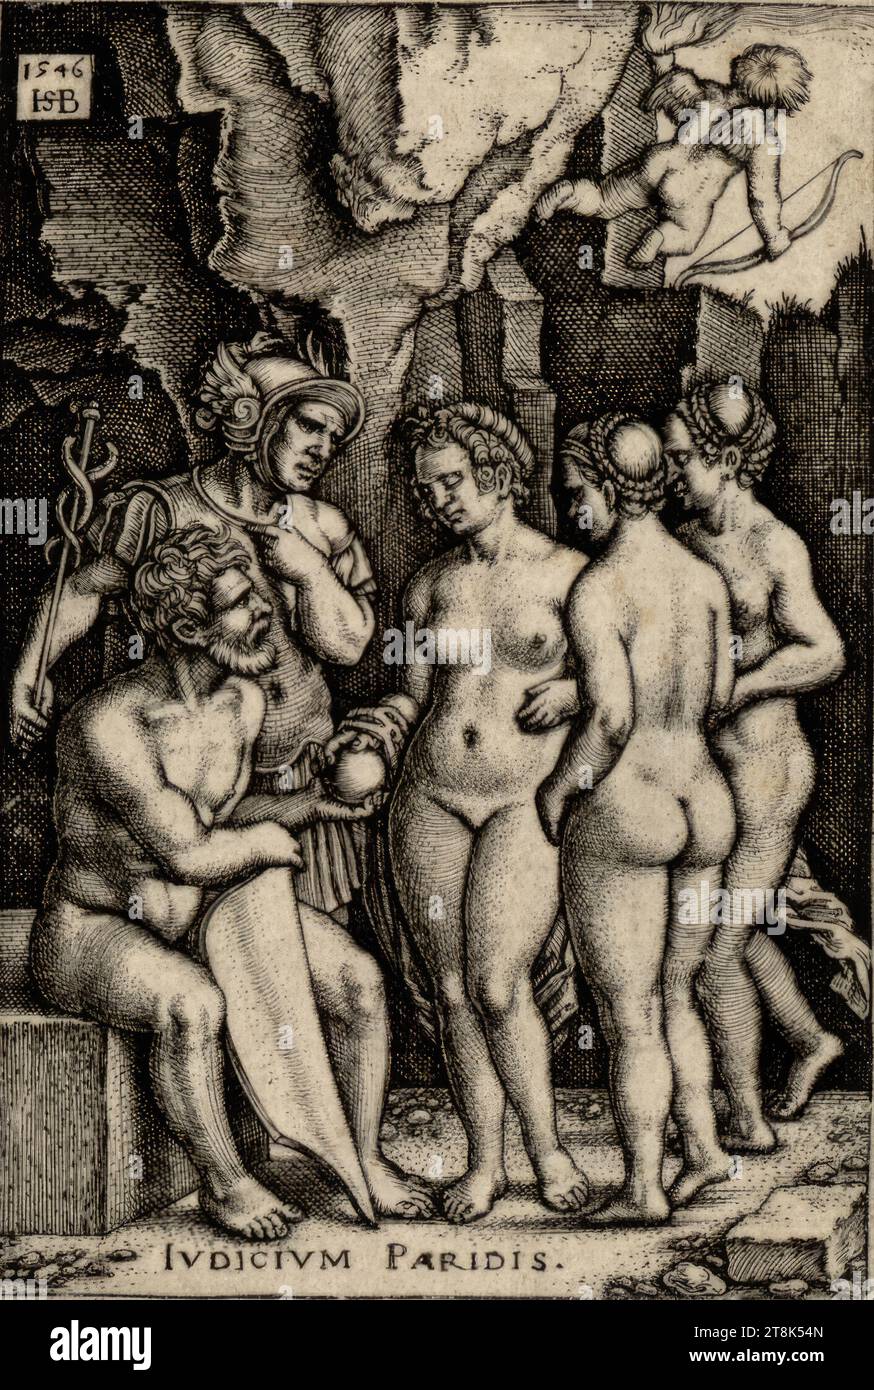 The Judgment of Paris, Sebald Beham, Nuremberg 1500 - 1550 Frankfurt am Main, 1546, print, copperplate engraving Stock Photo